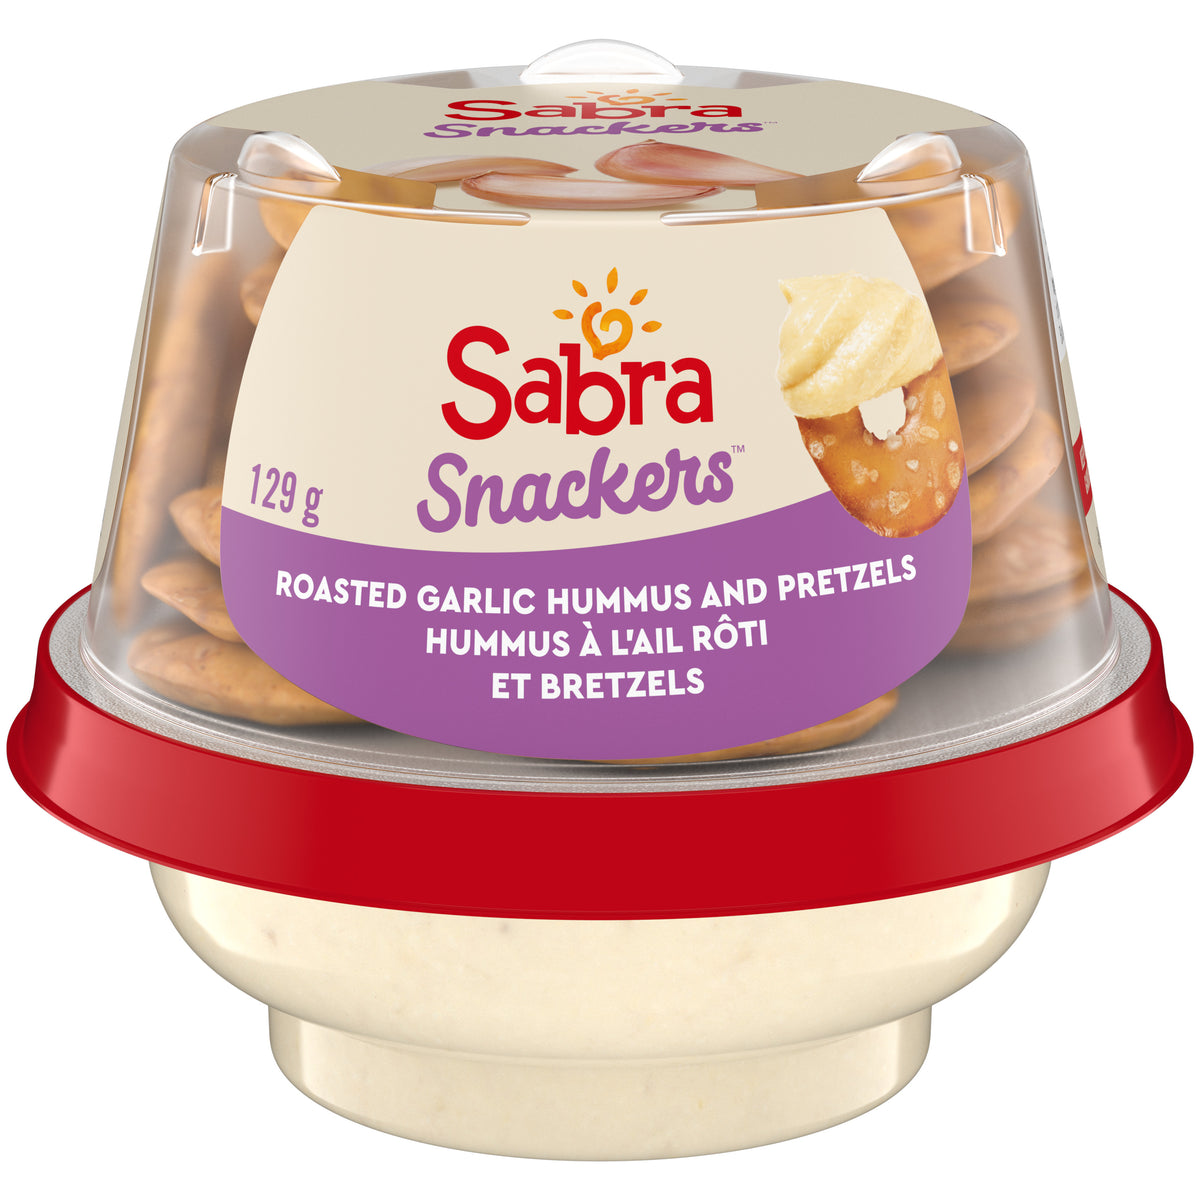 Sabra Snackers Roasted Garlic Hummus with Pretzels - 129g